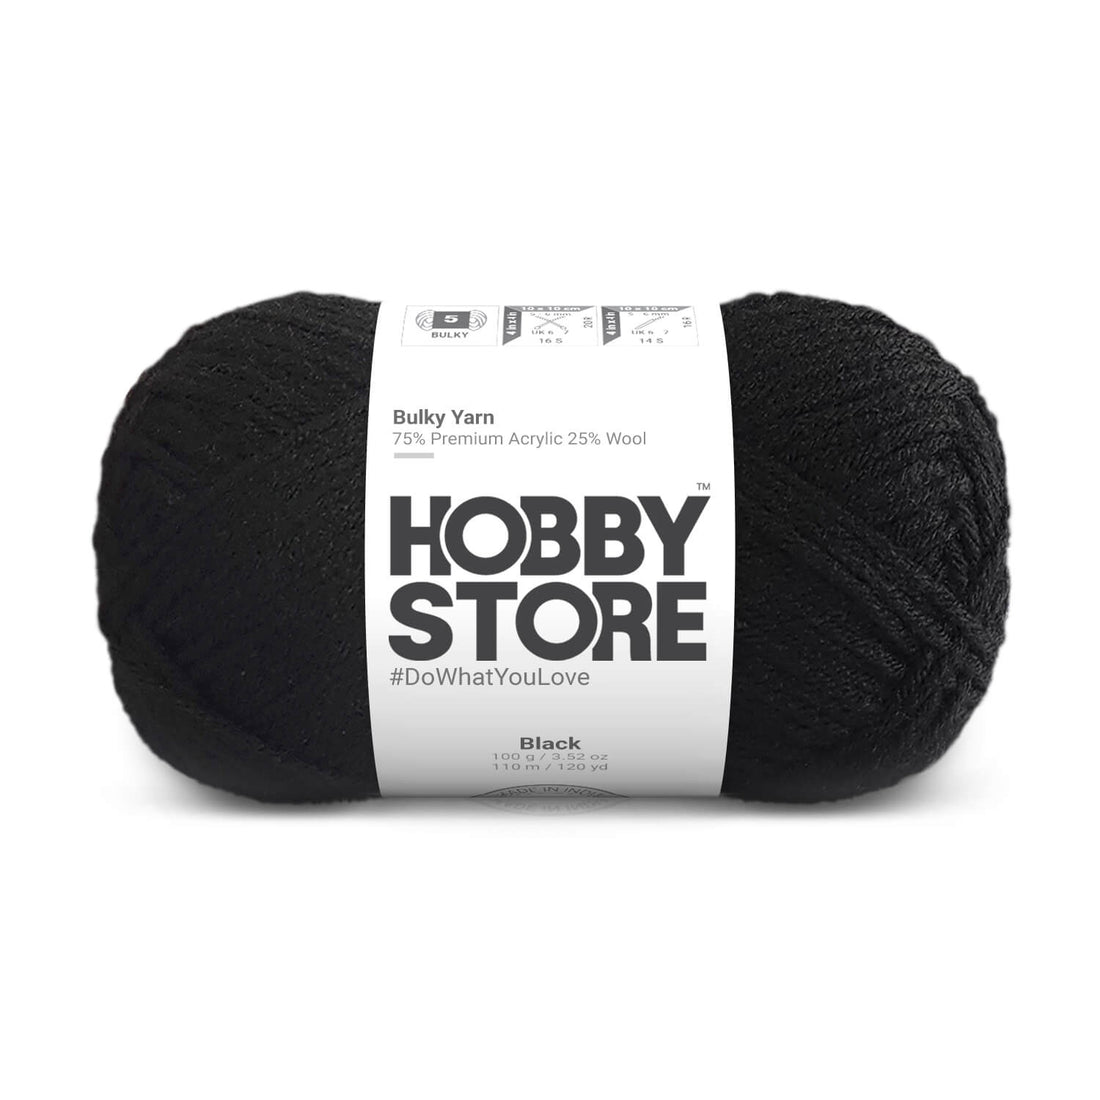 Bulky Yarn by Hobby Store - Black 6021